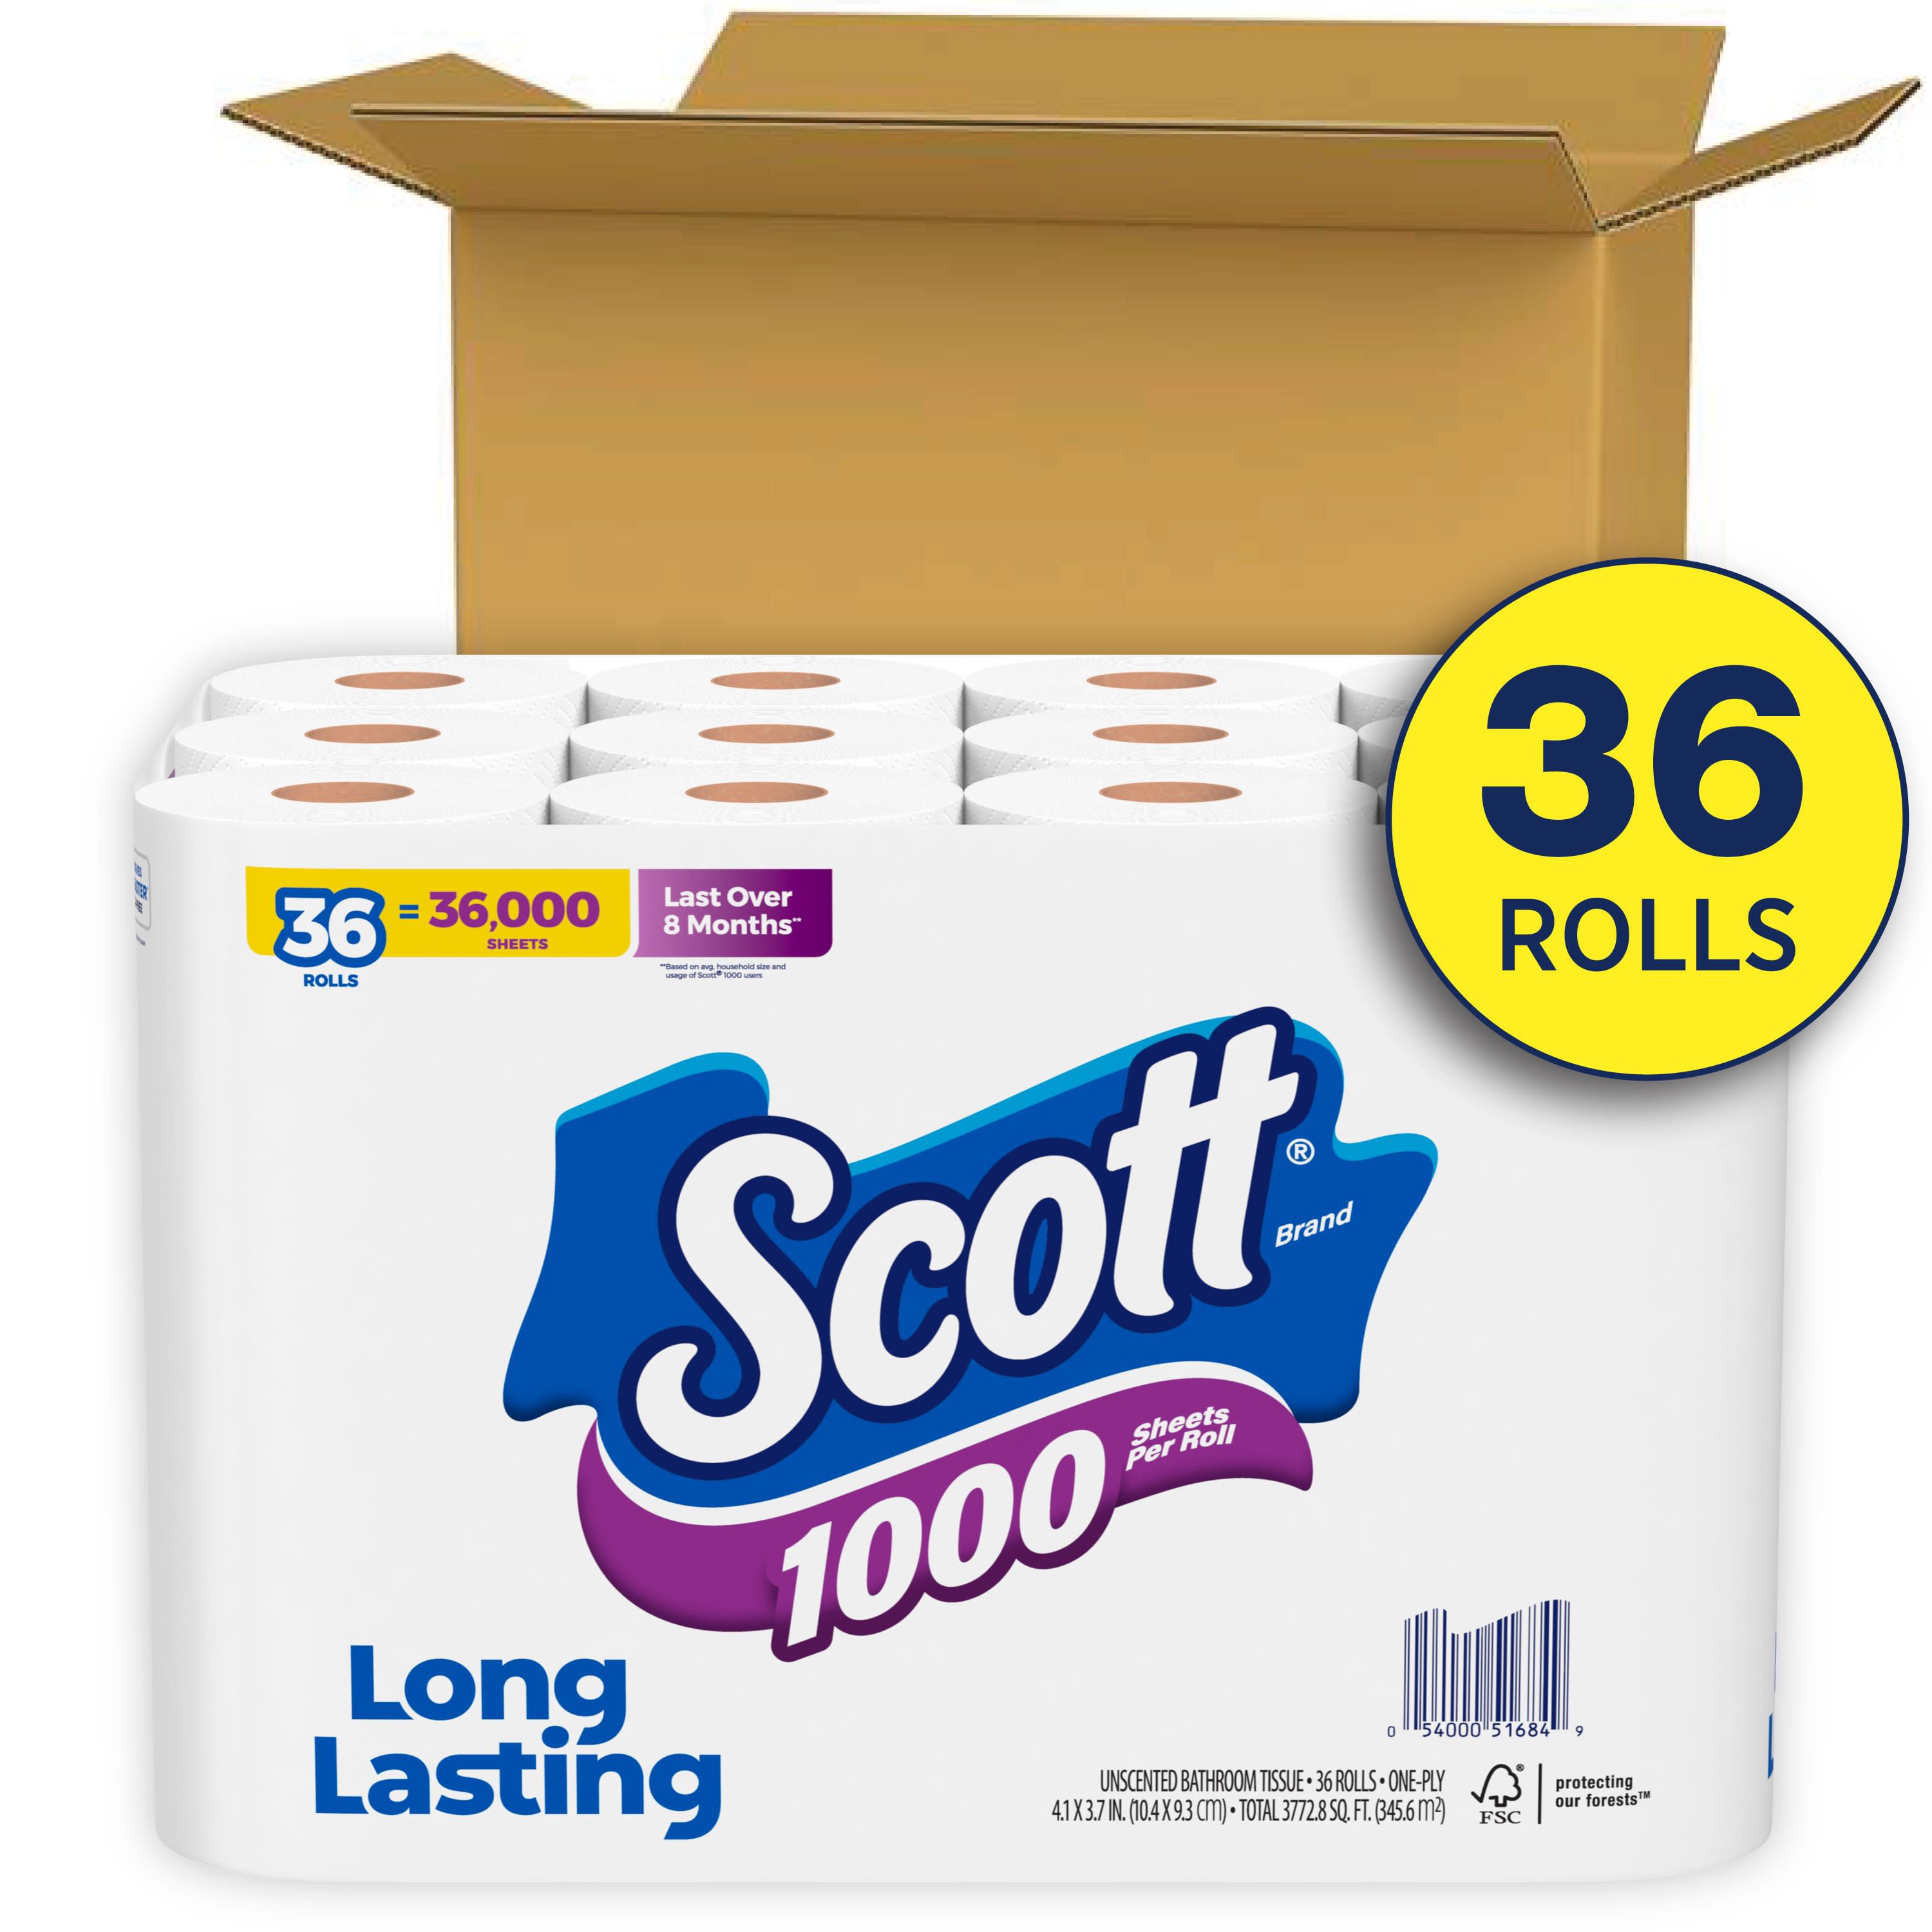 Scott 1000 Toilet Paper, 36 Rolls, 1,000 Sheets per Roll - image 3 of 12